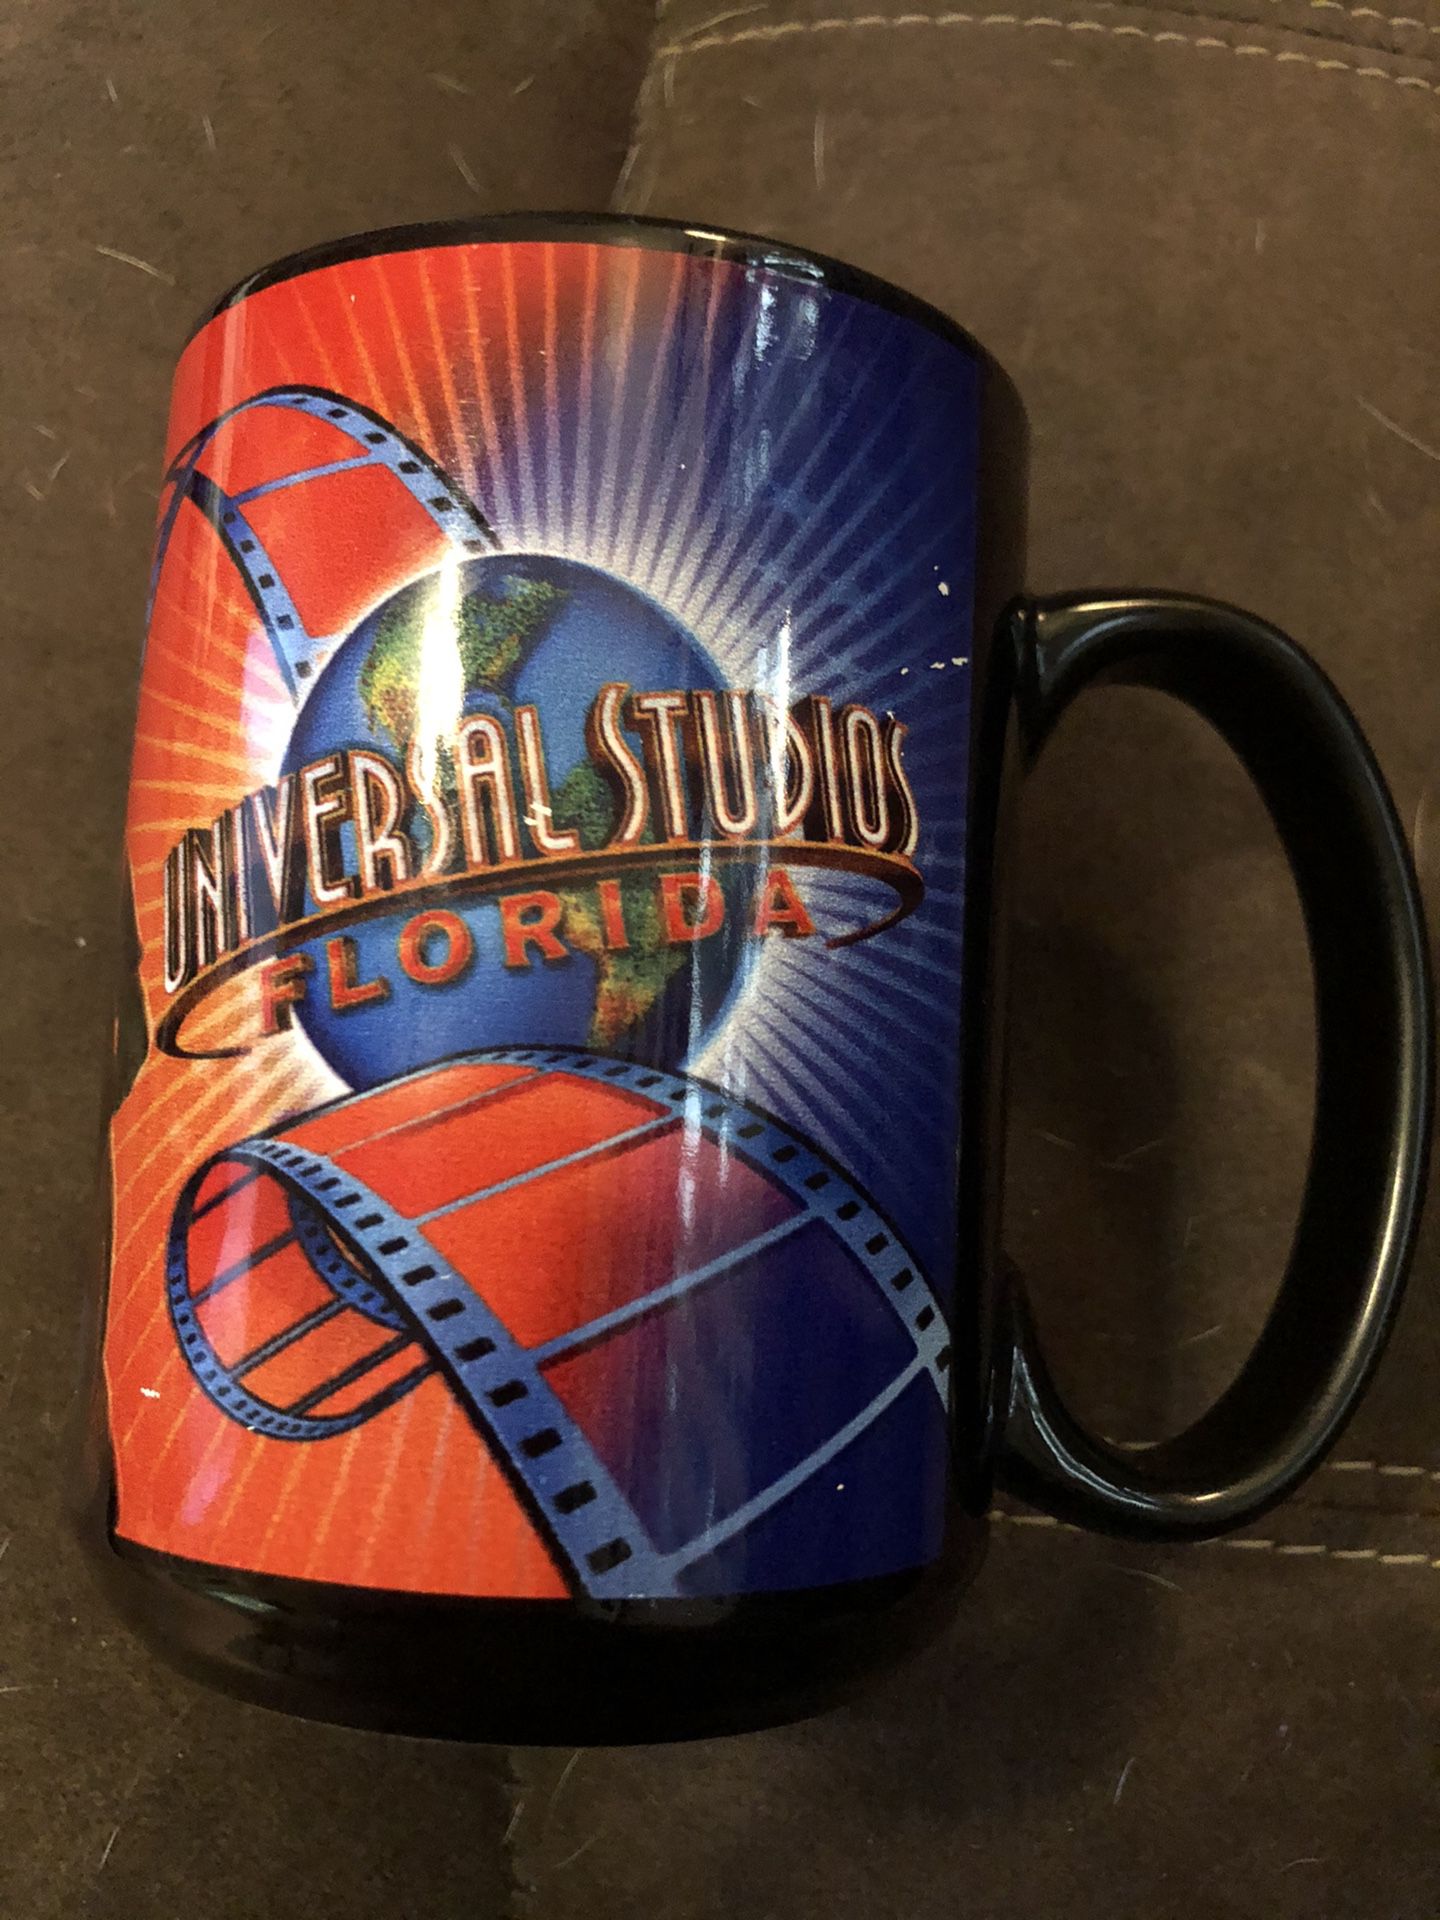 Universal Studios Florida Coffee Mug Shrek Spider-Man Dr Seuss Cat Hat Black